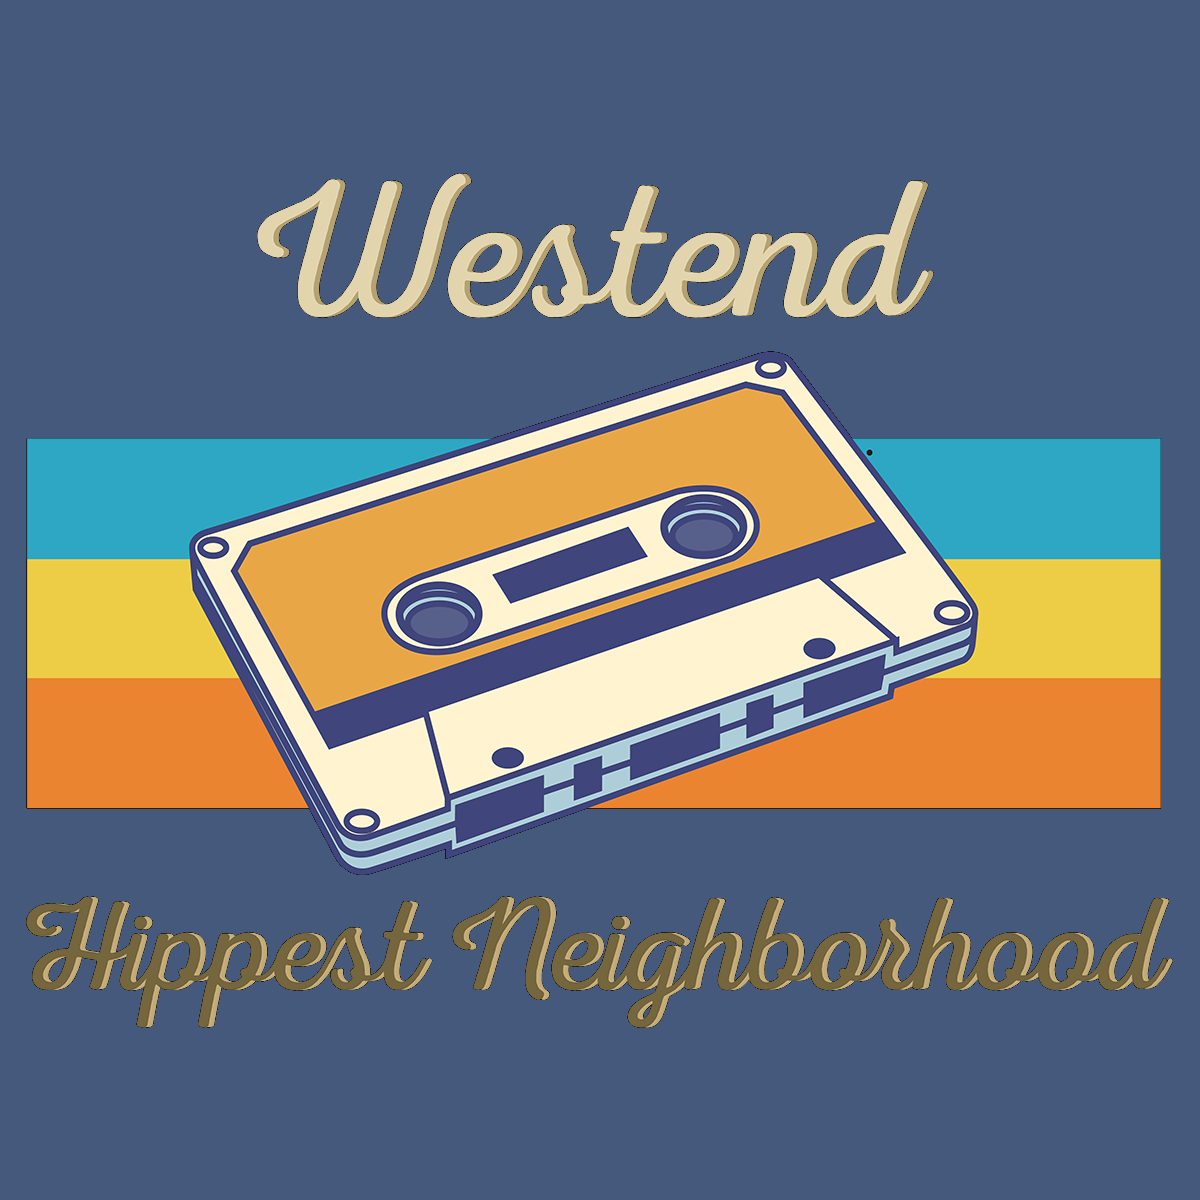 Westend Hippest Neighborhood